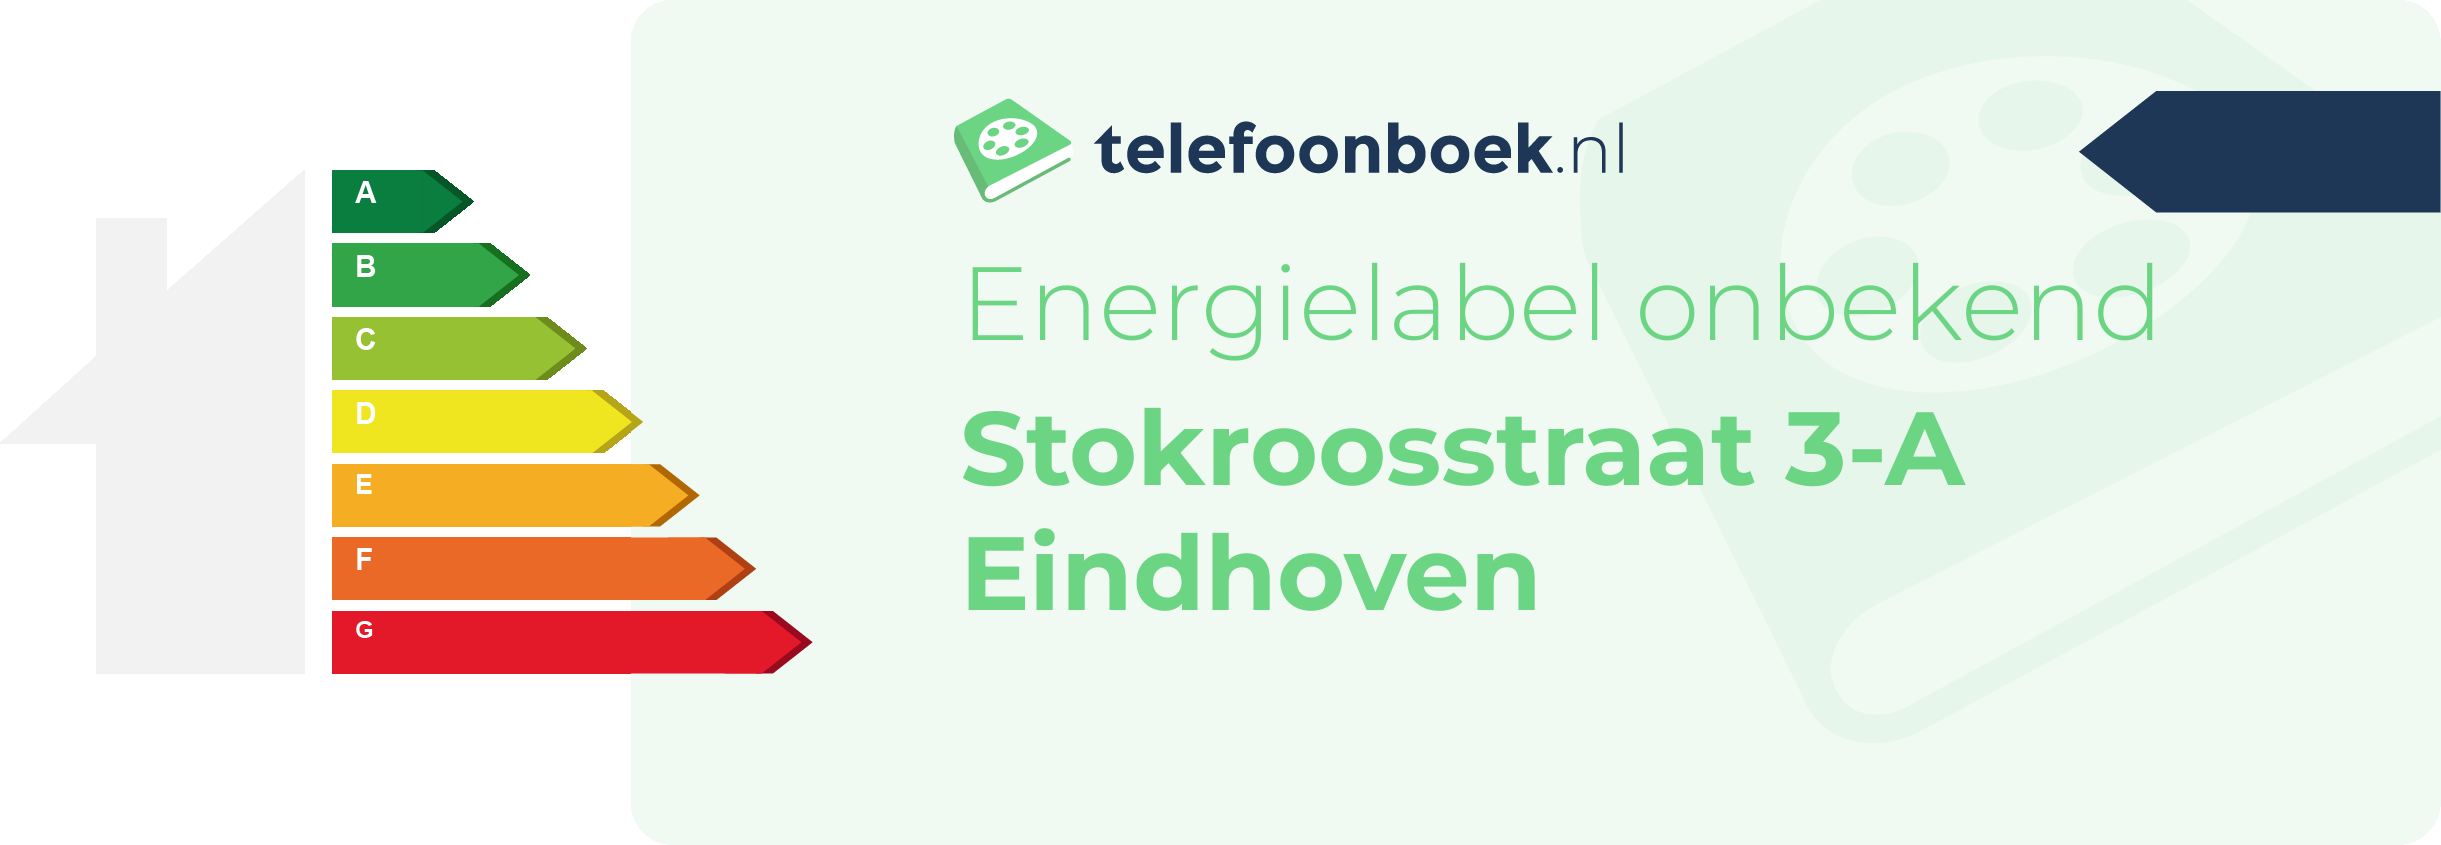 Energielabel Stokroosstraat 3-A Eindhoven